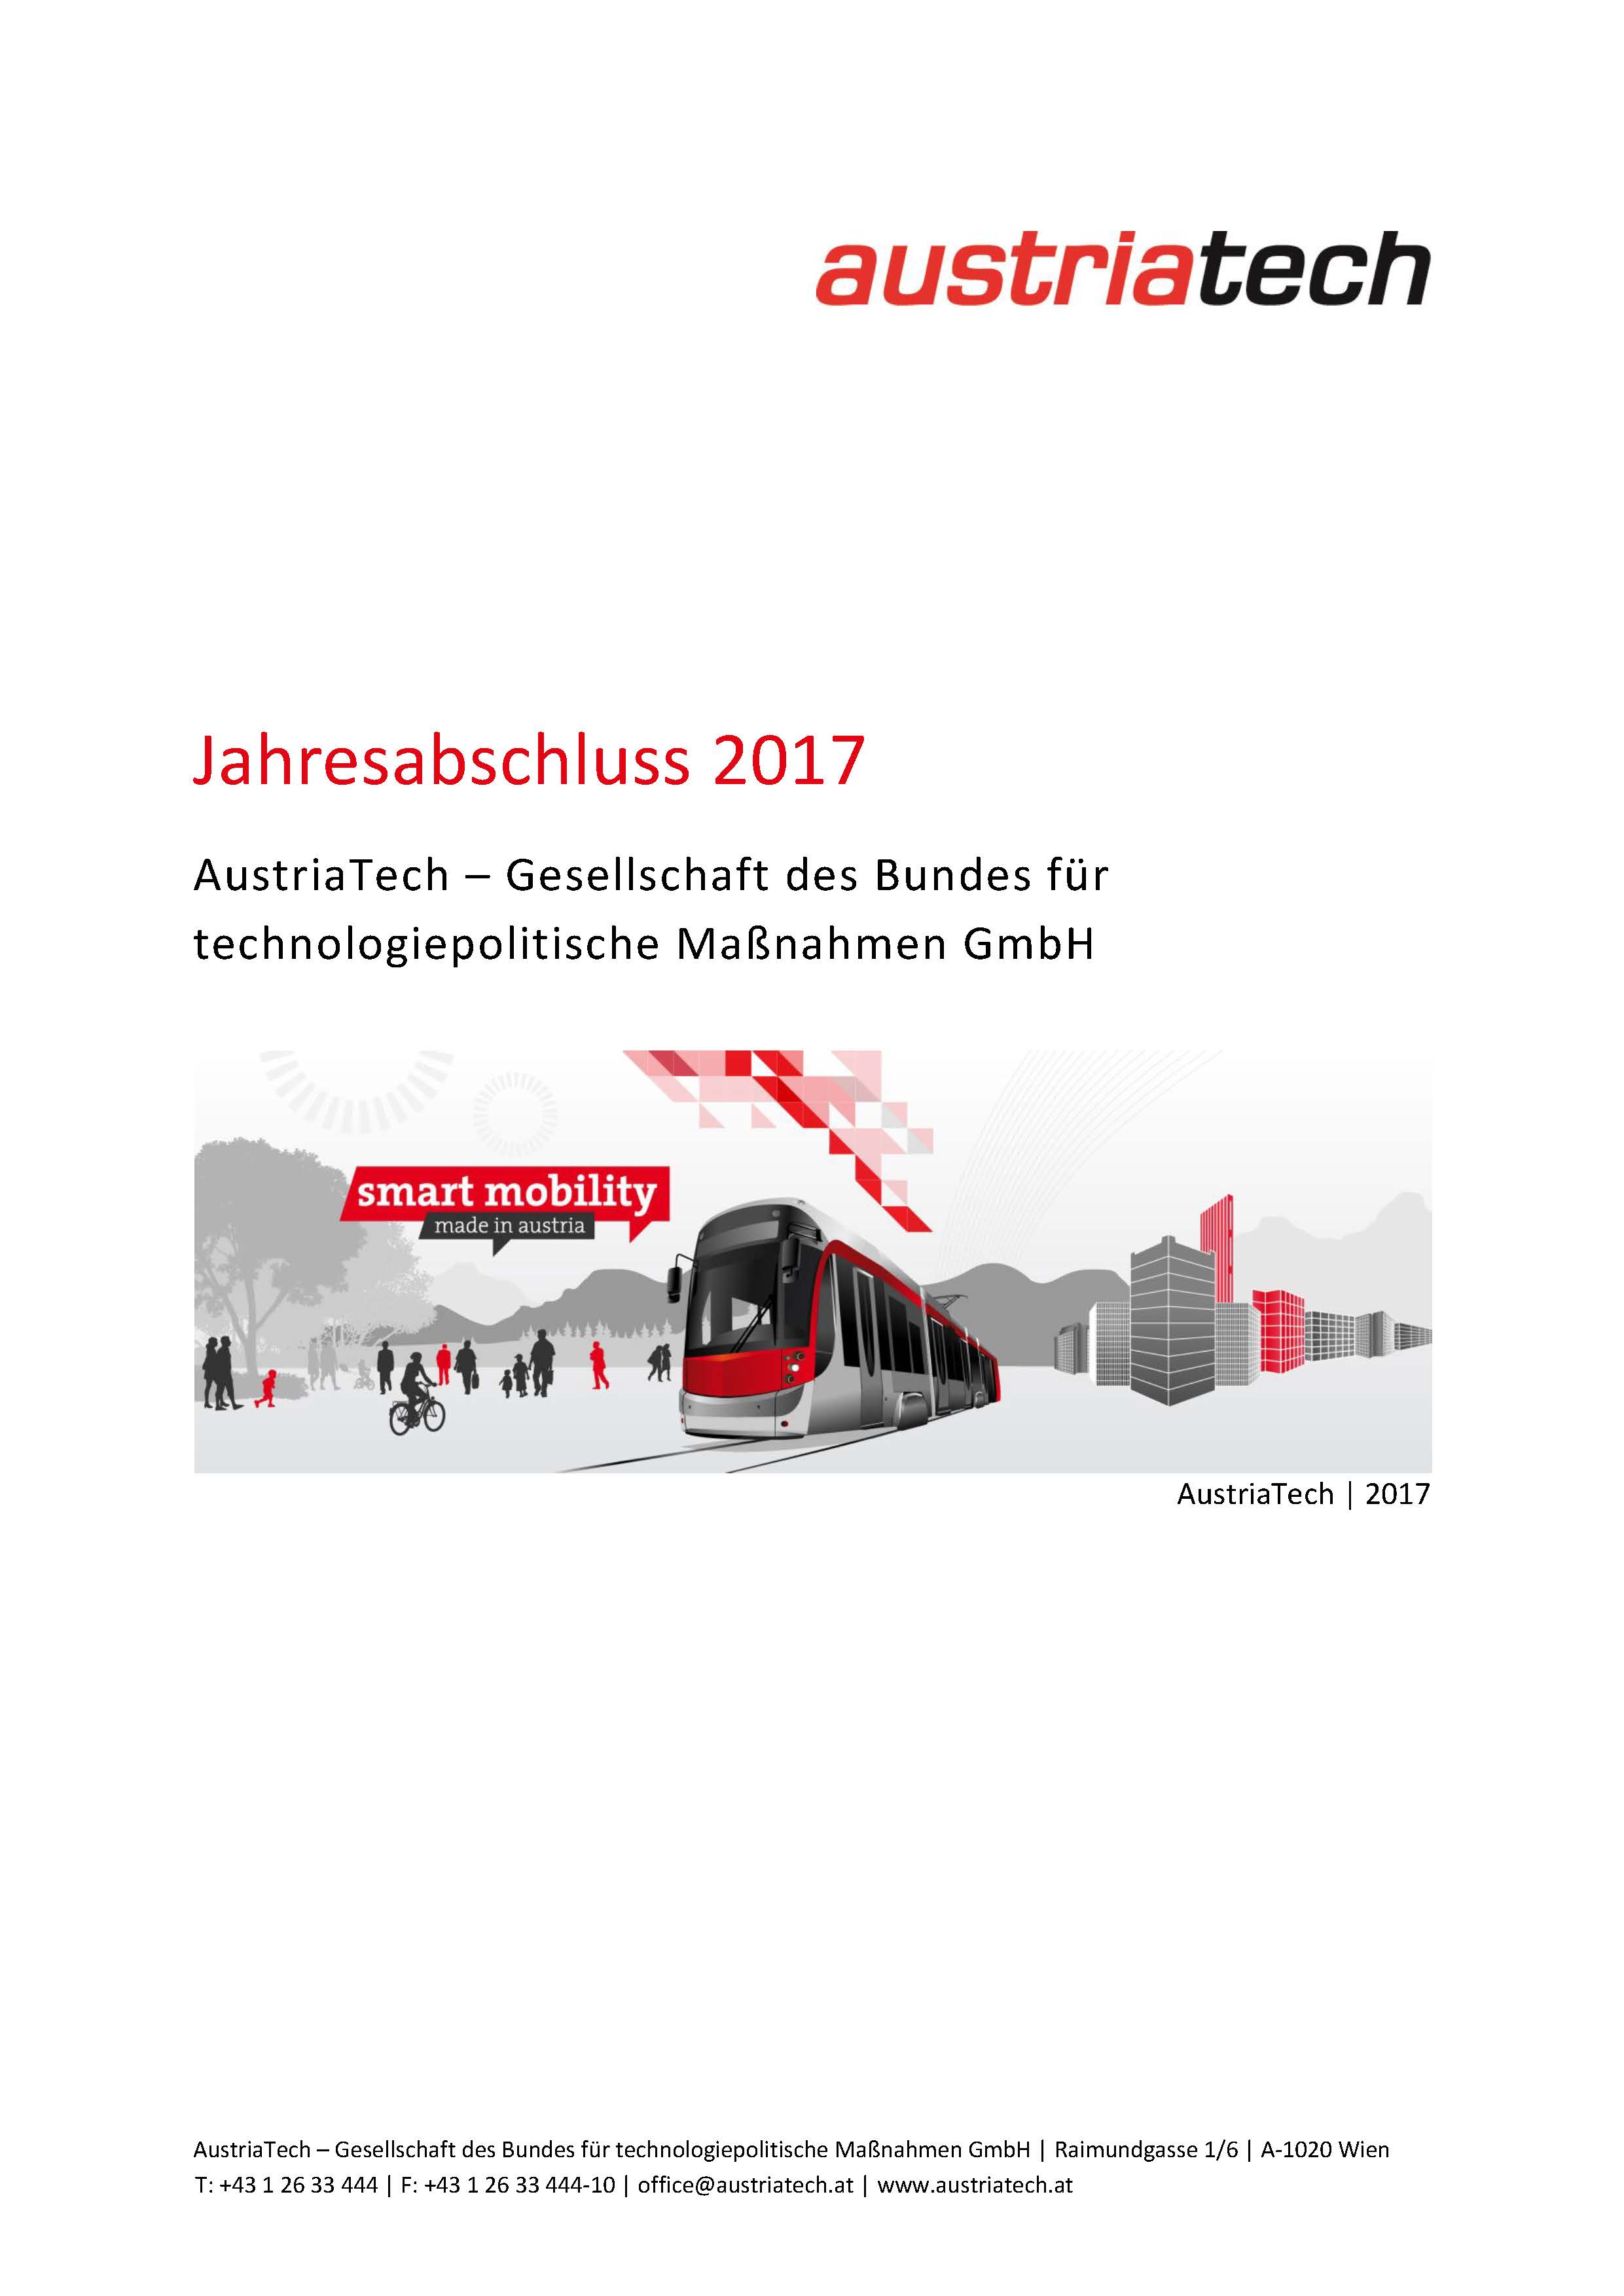 AustriaTech Jahreabschluss 2017